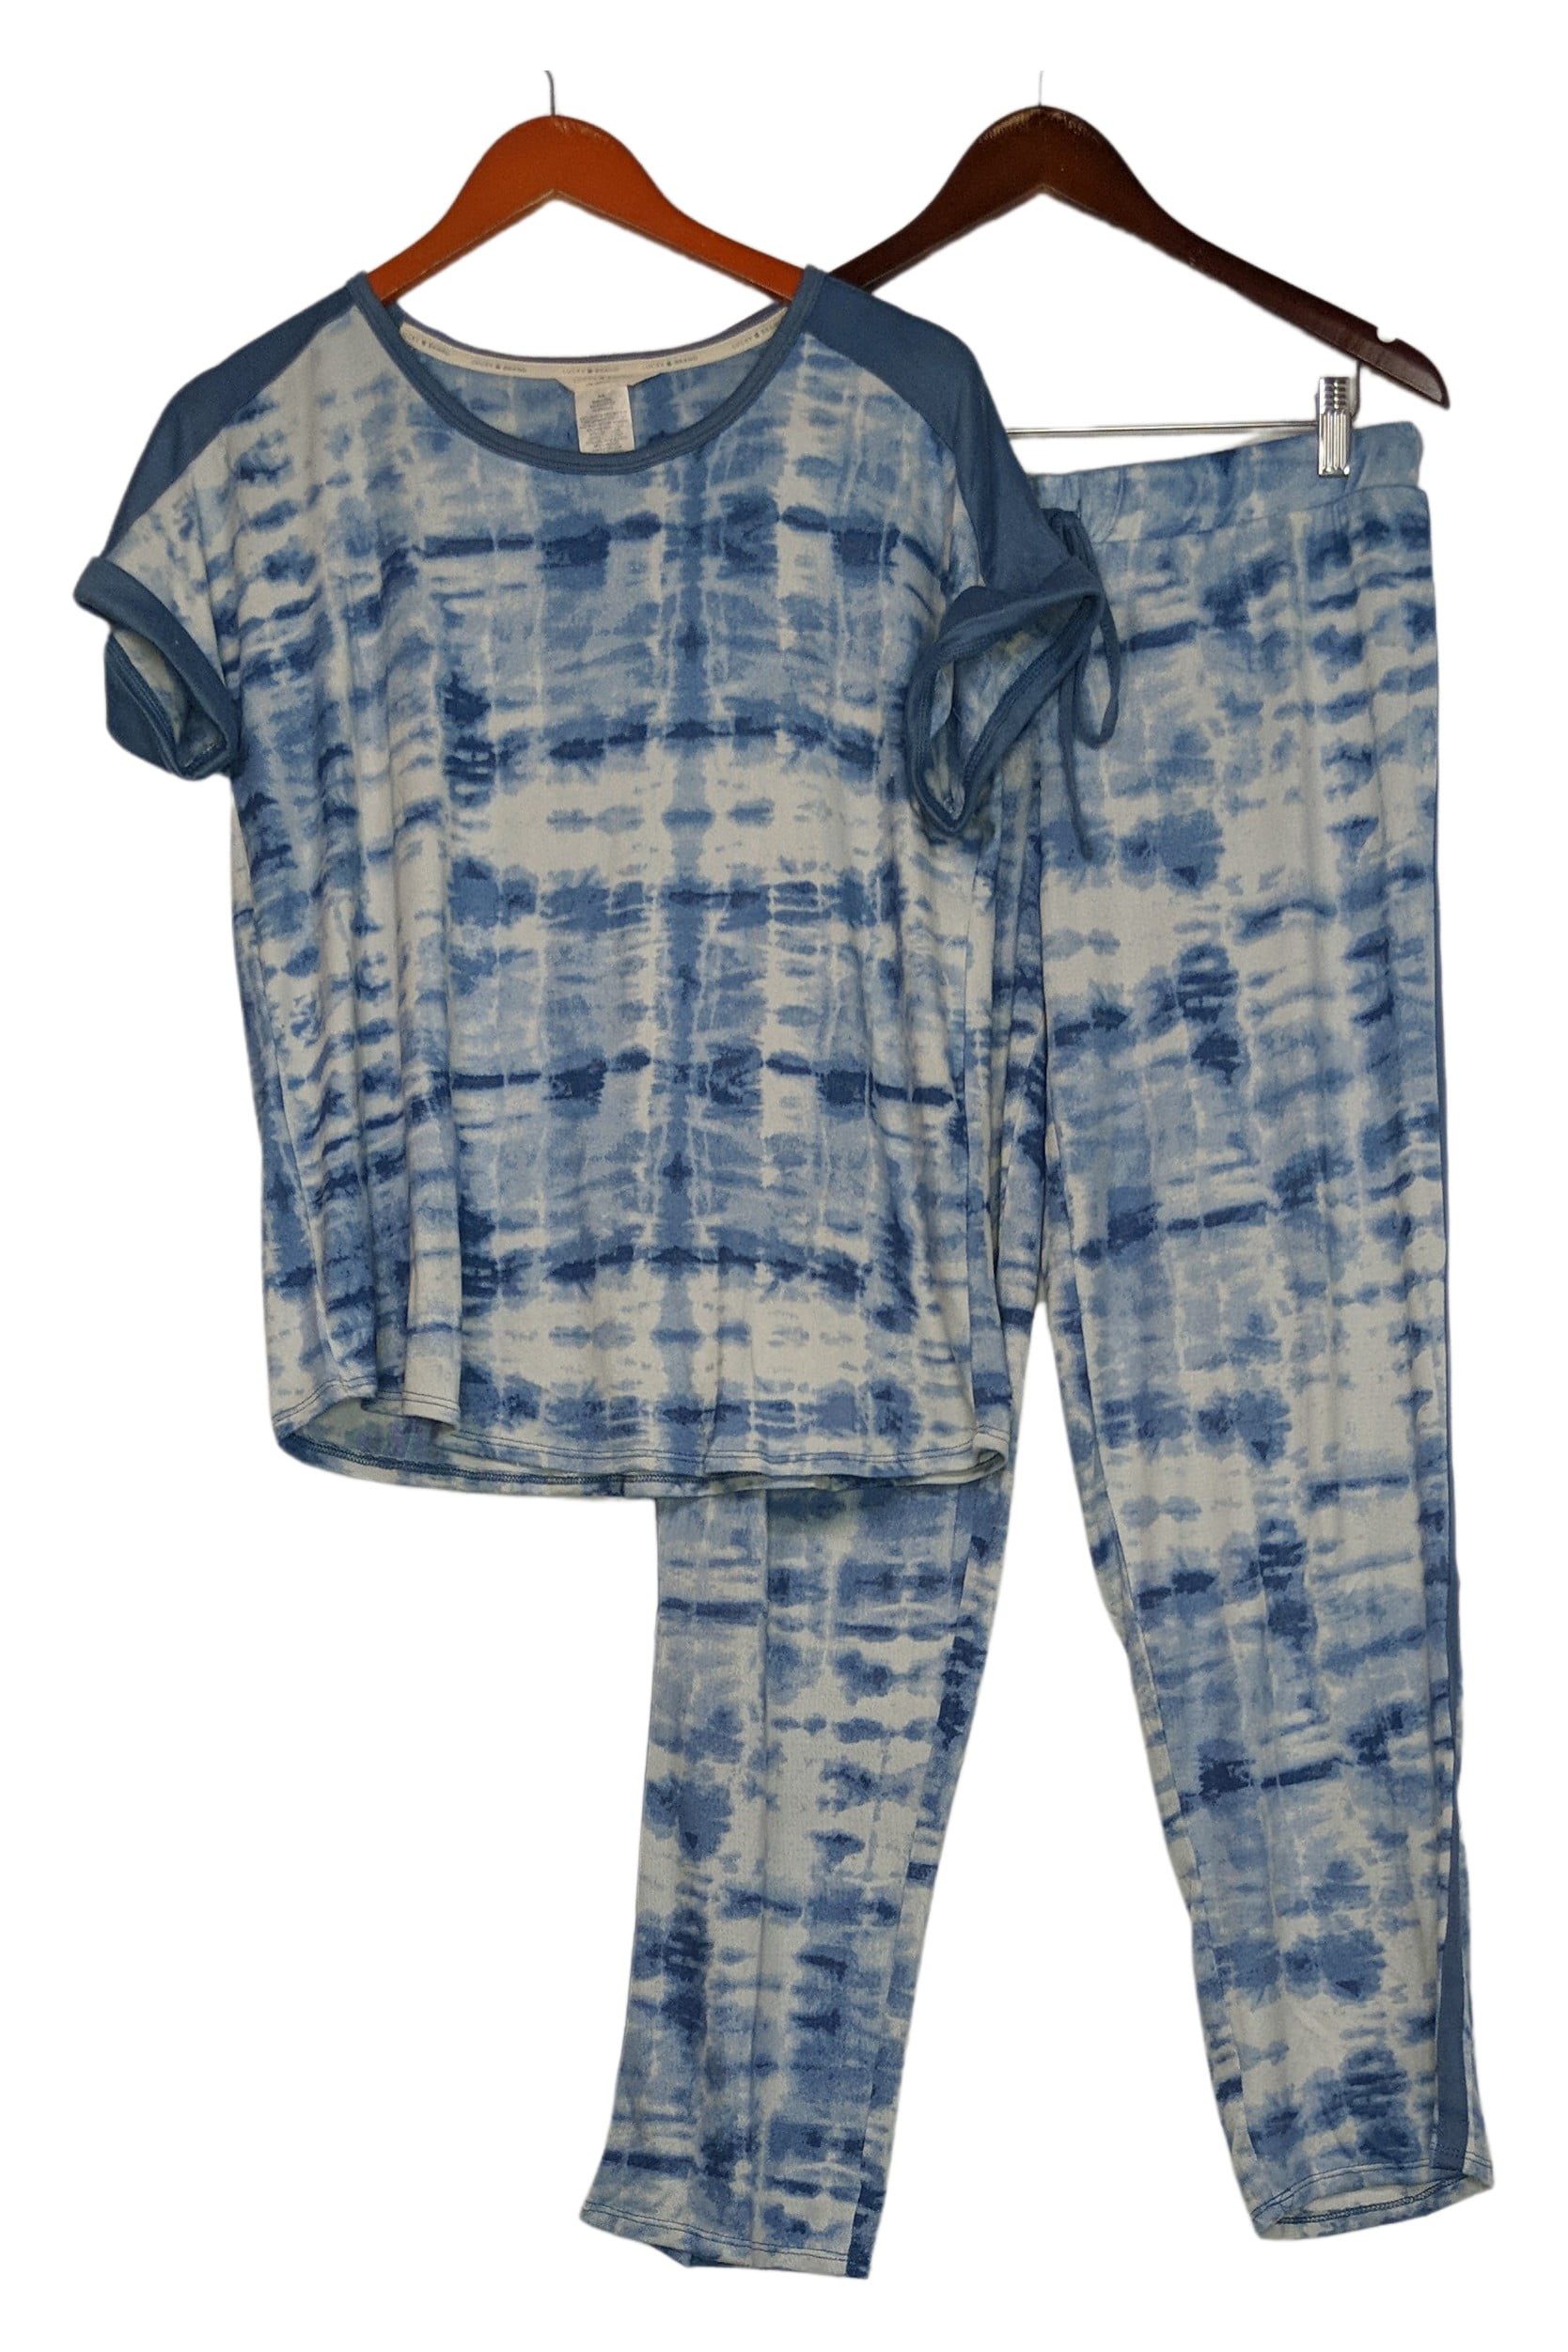 Lucky Brand Pajama Set Women's Size M 4 Piece Set T Tank Short